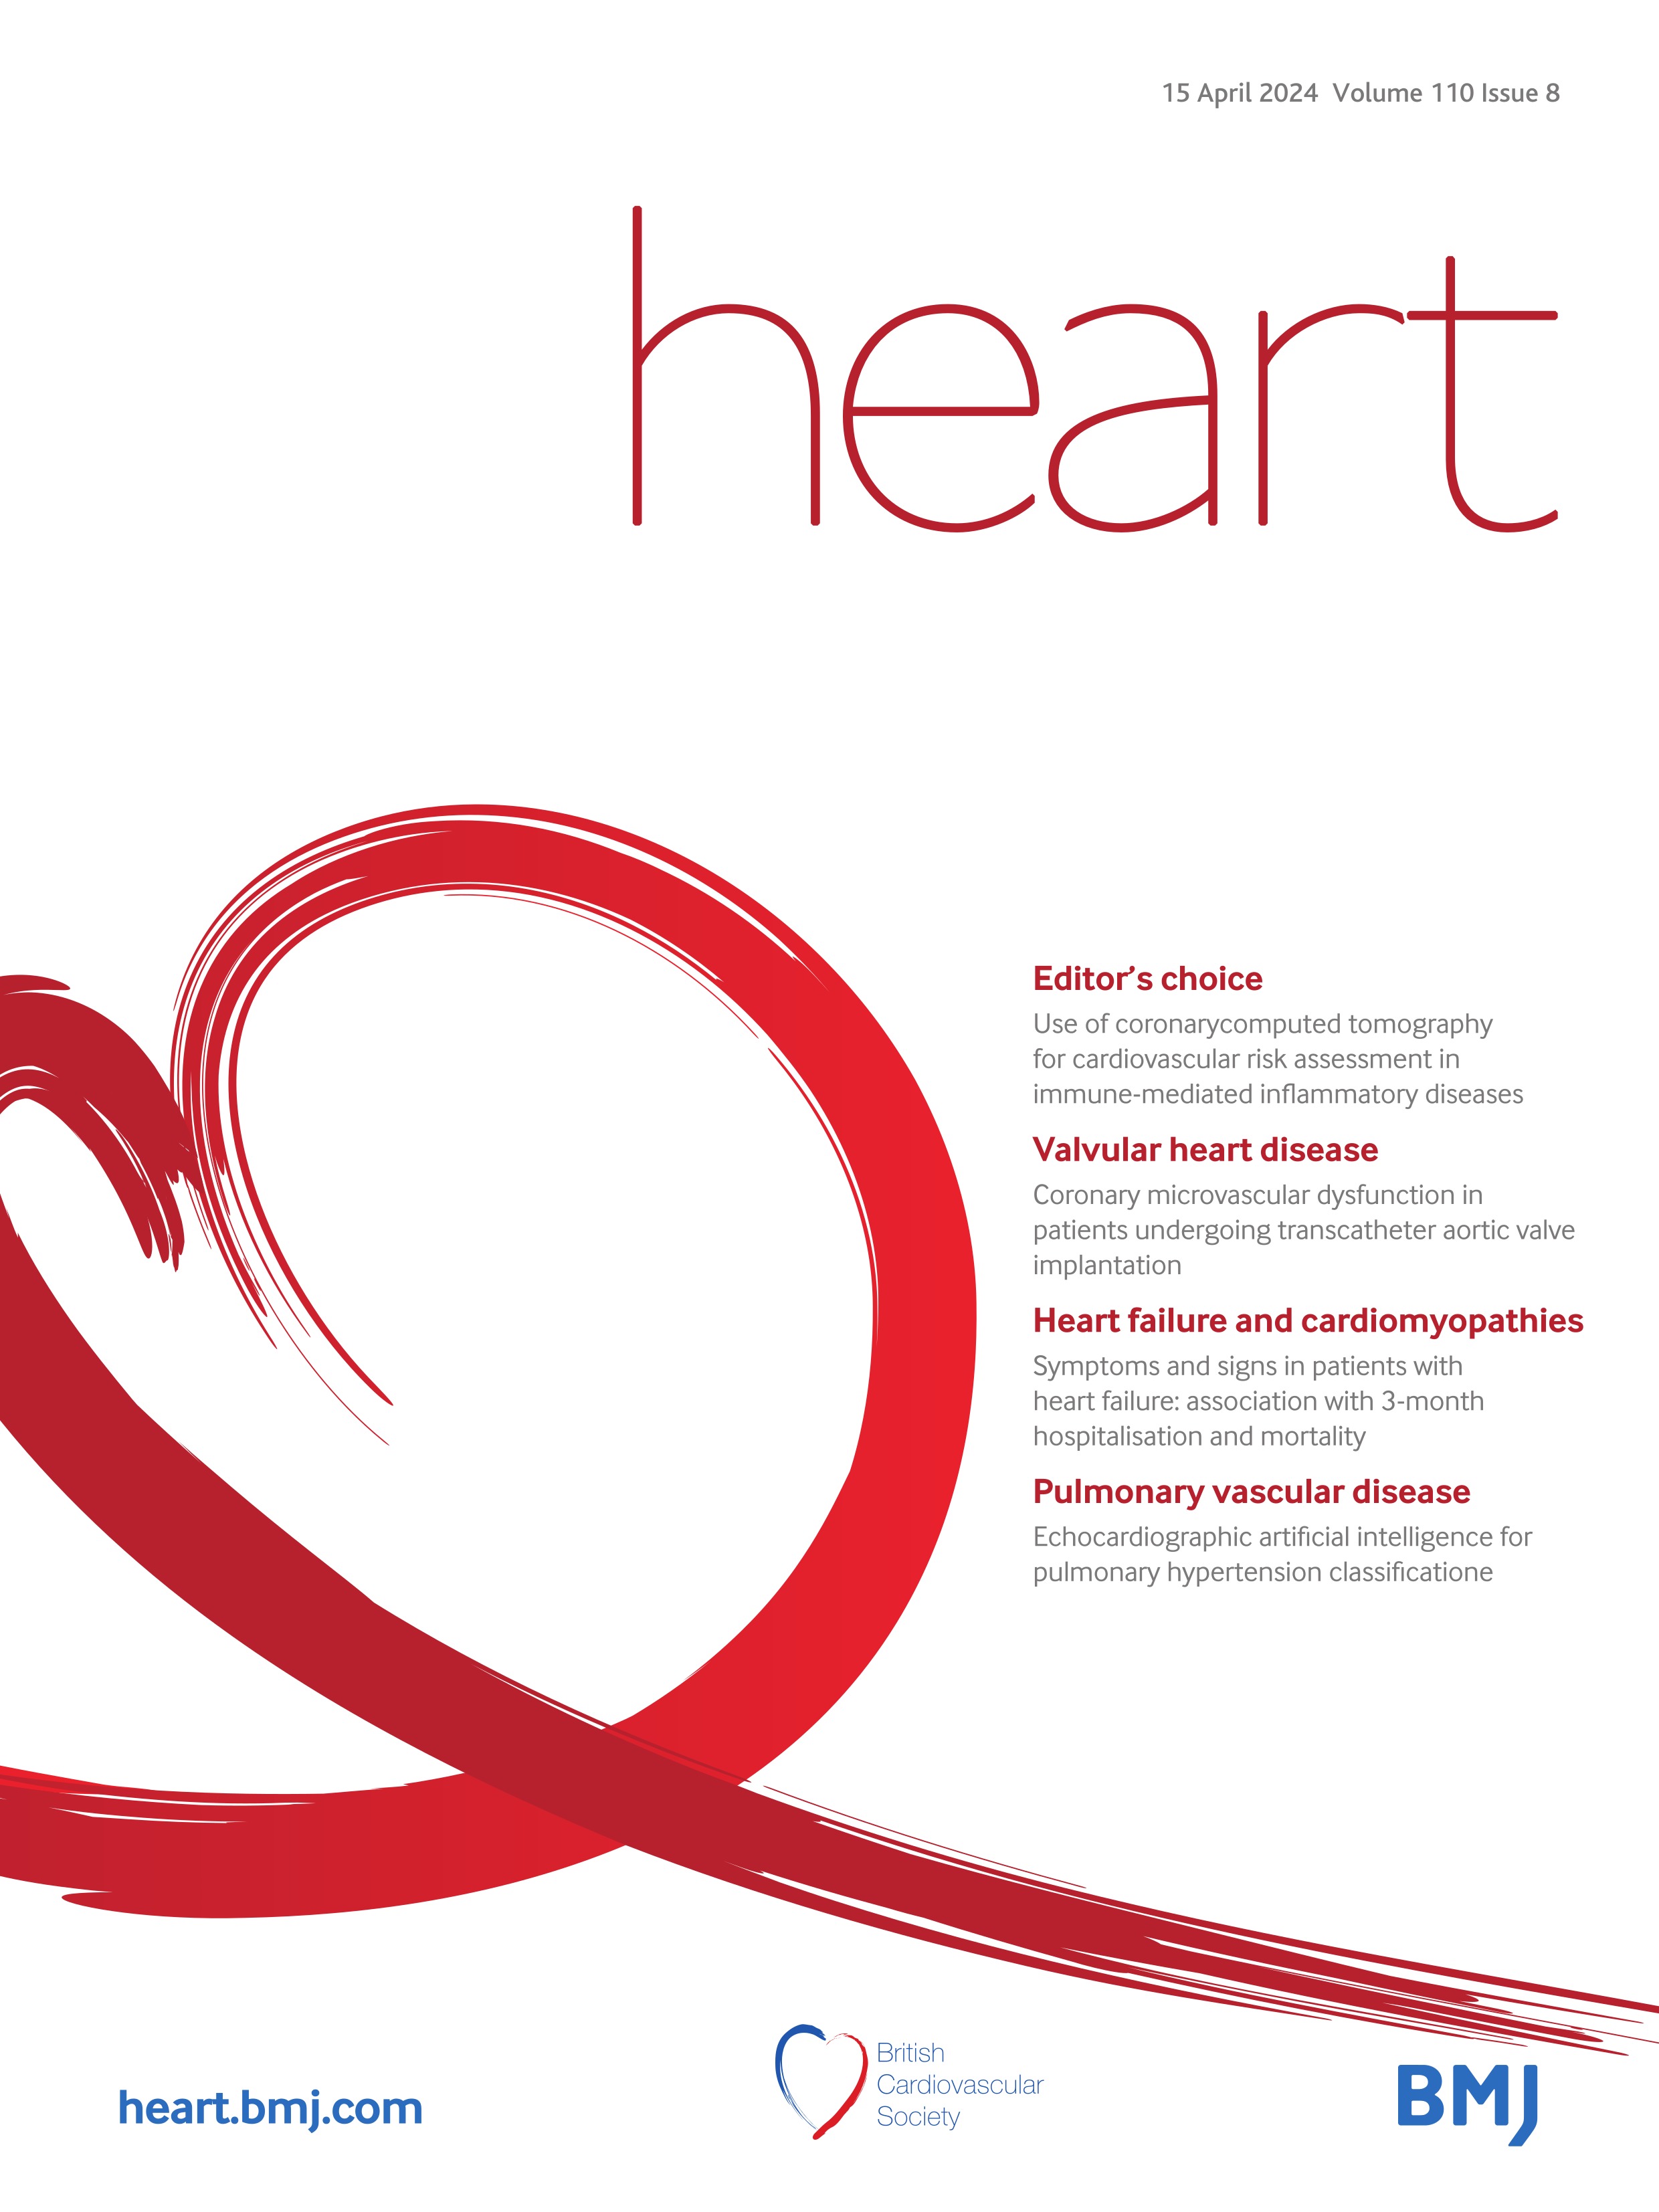 Postdischarge major bleeding, myocardial infarction, and mortality risk after coronary artery bypass grafting